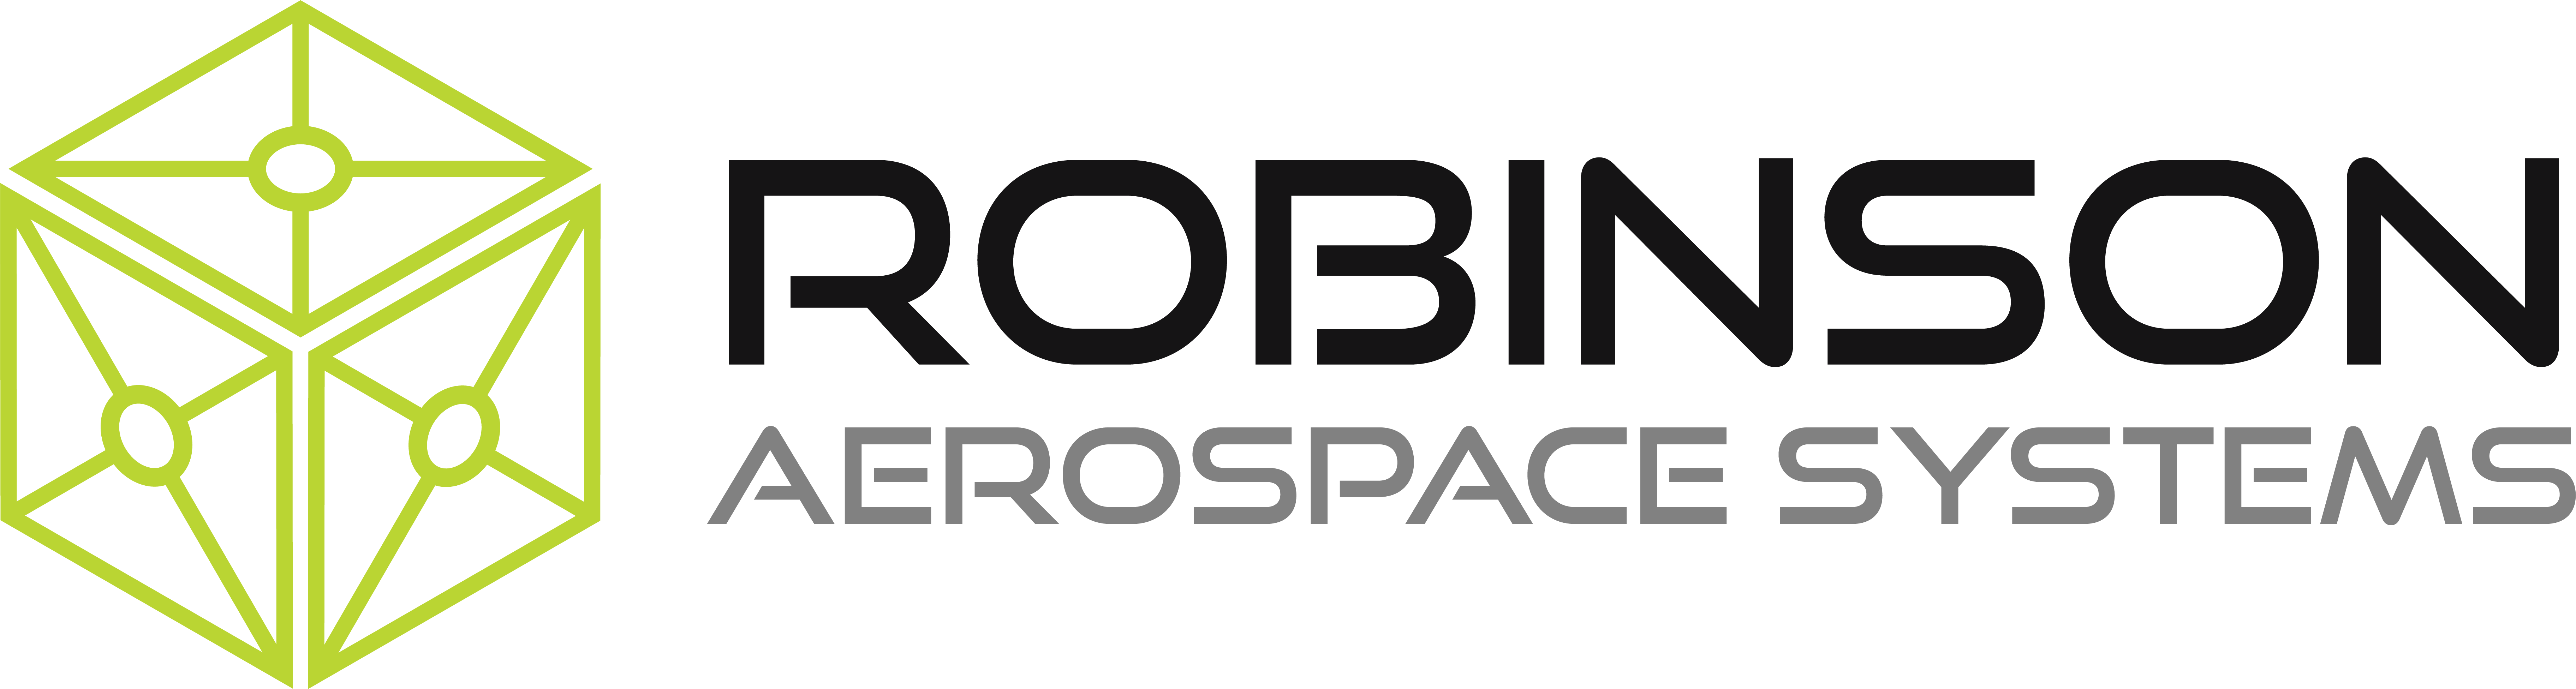 Robinson Aerospace Systems